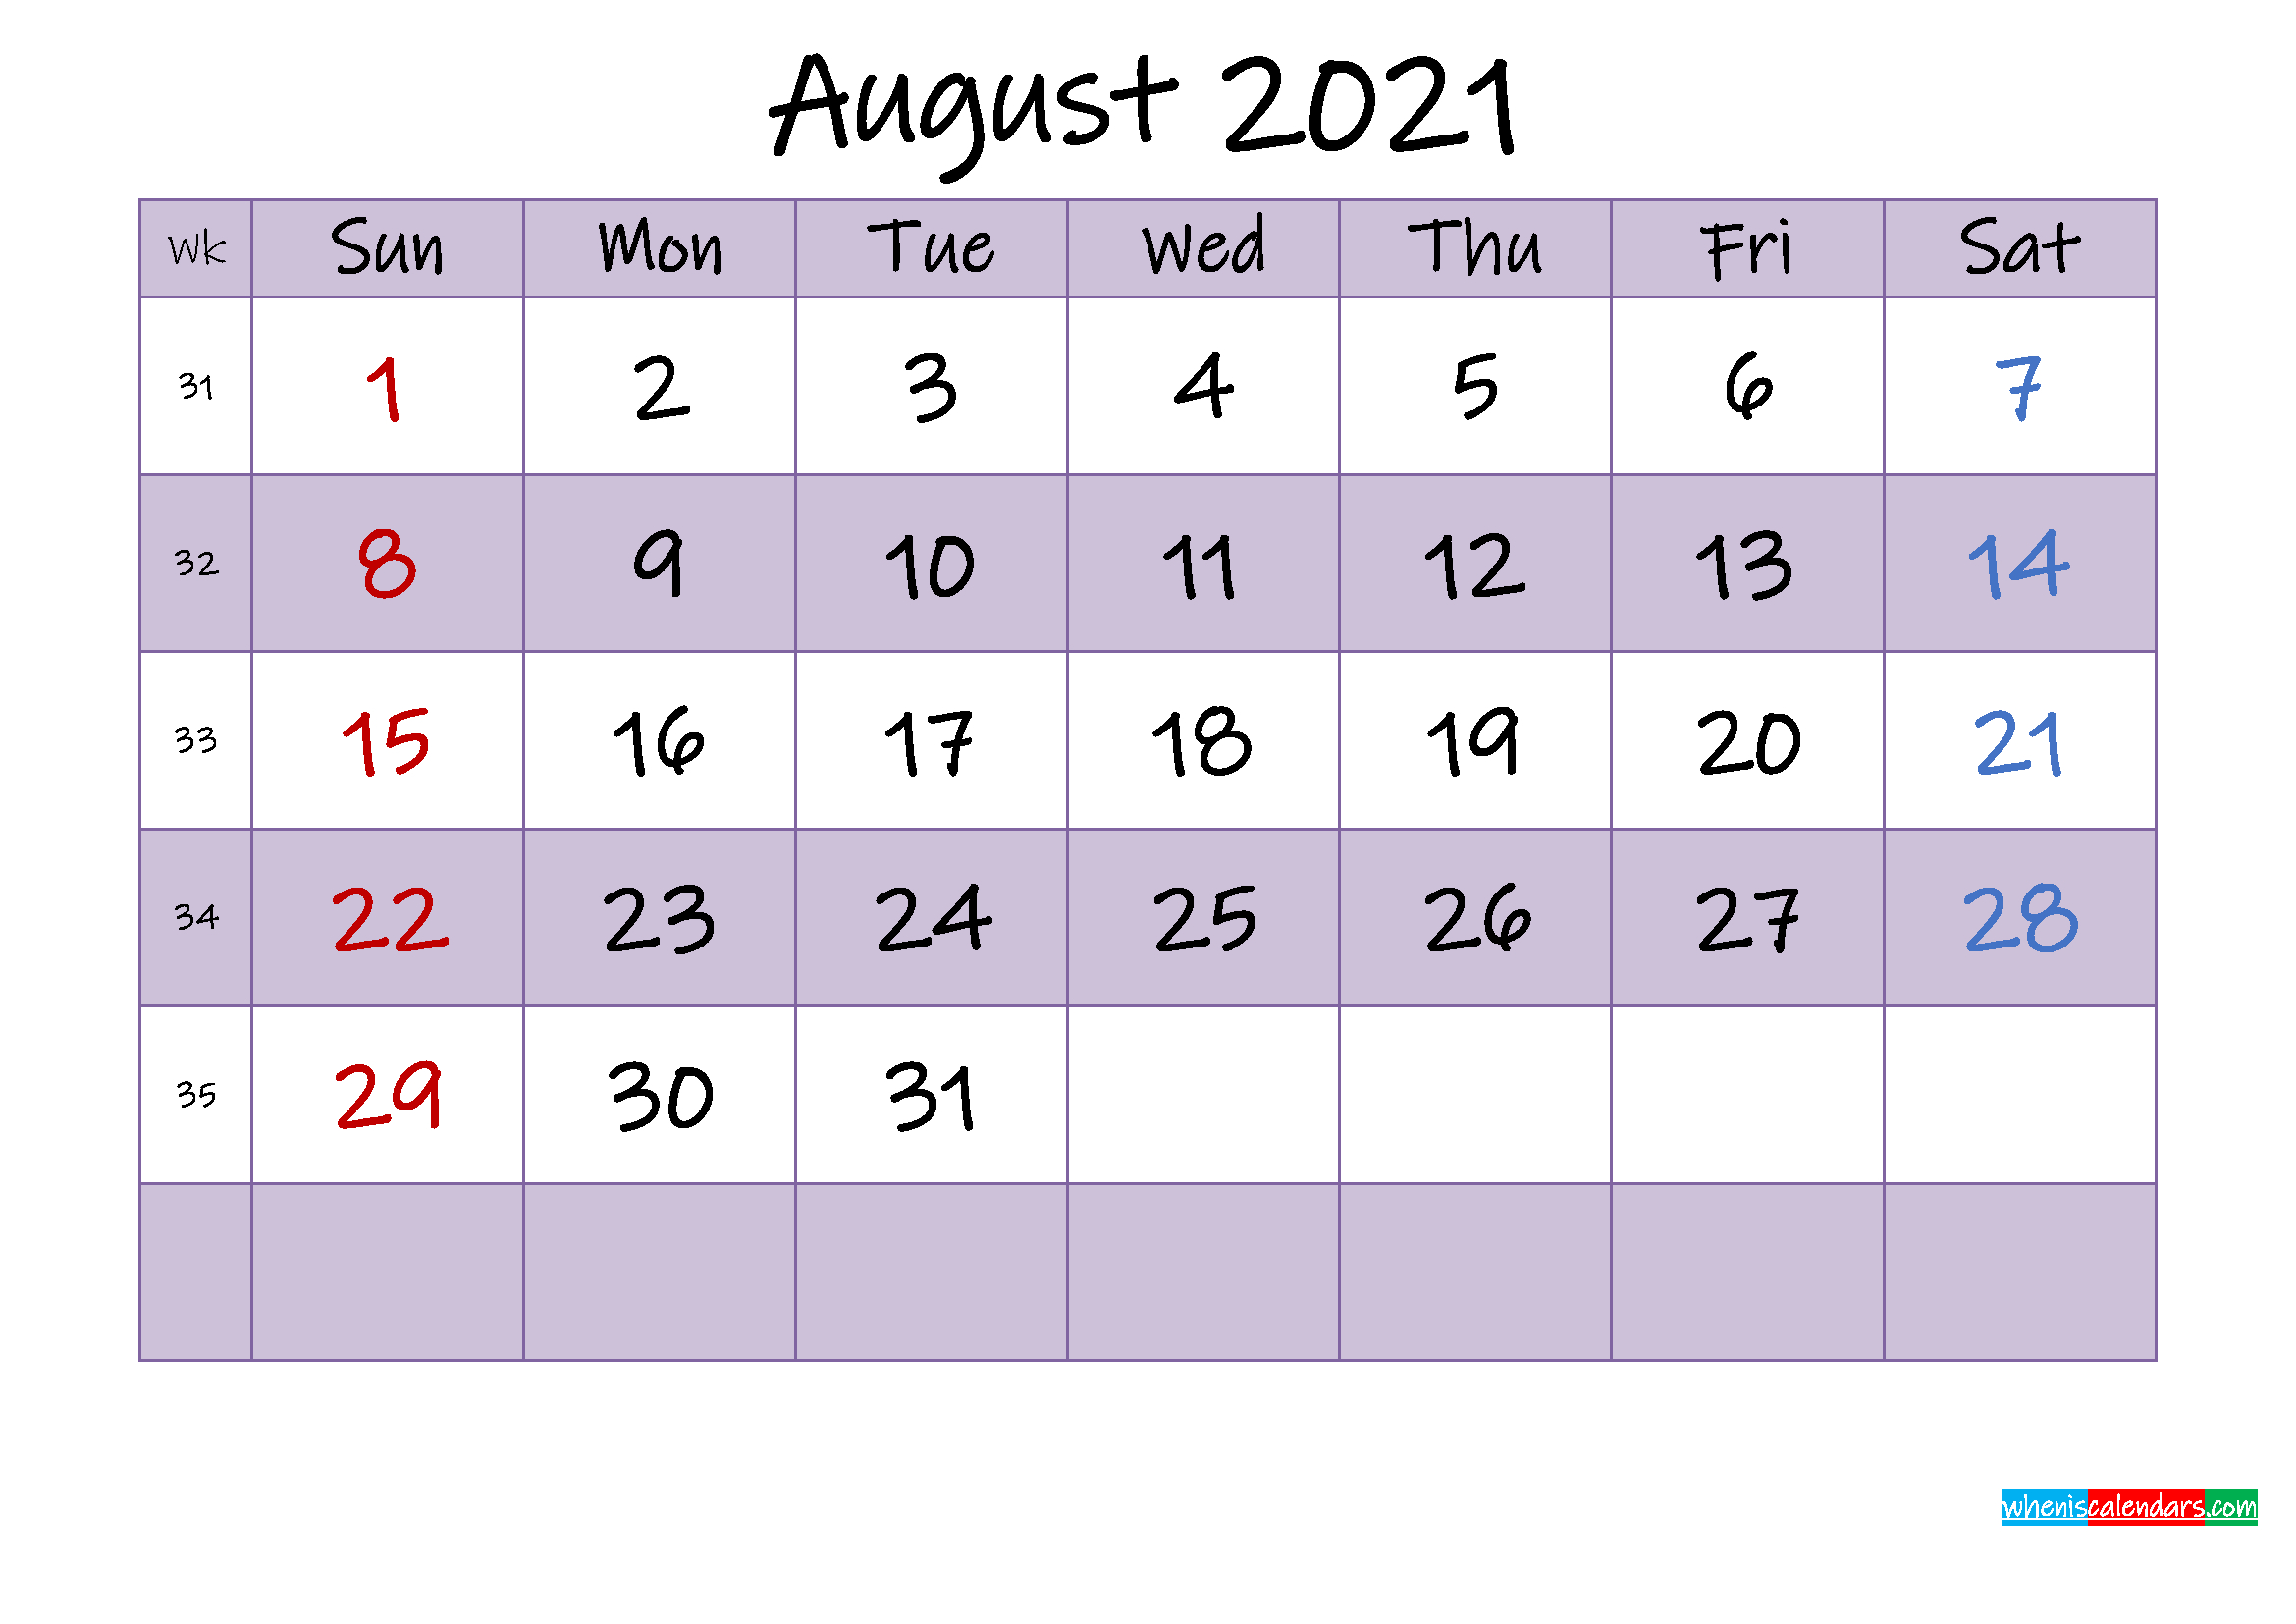 Editable August 2021 Calendar - Template Noink21M464